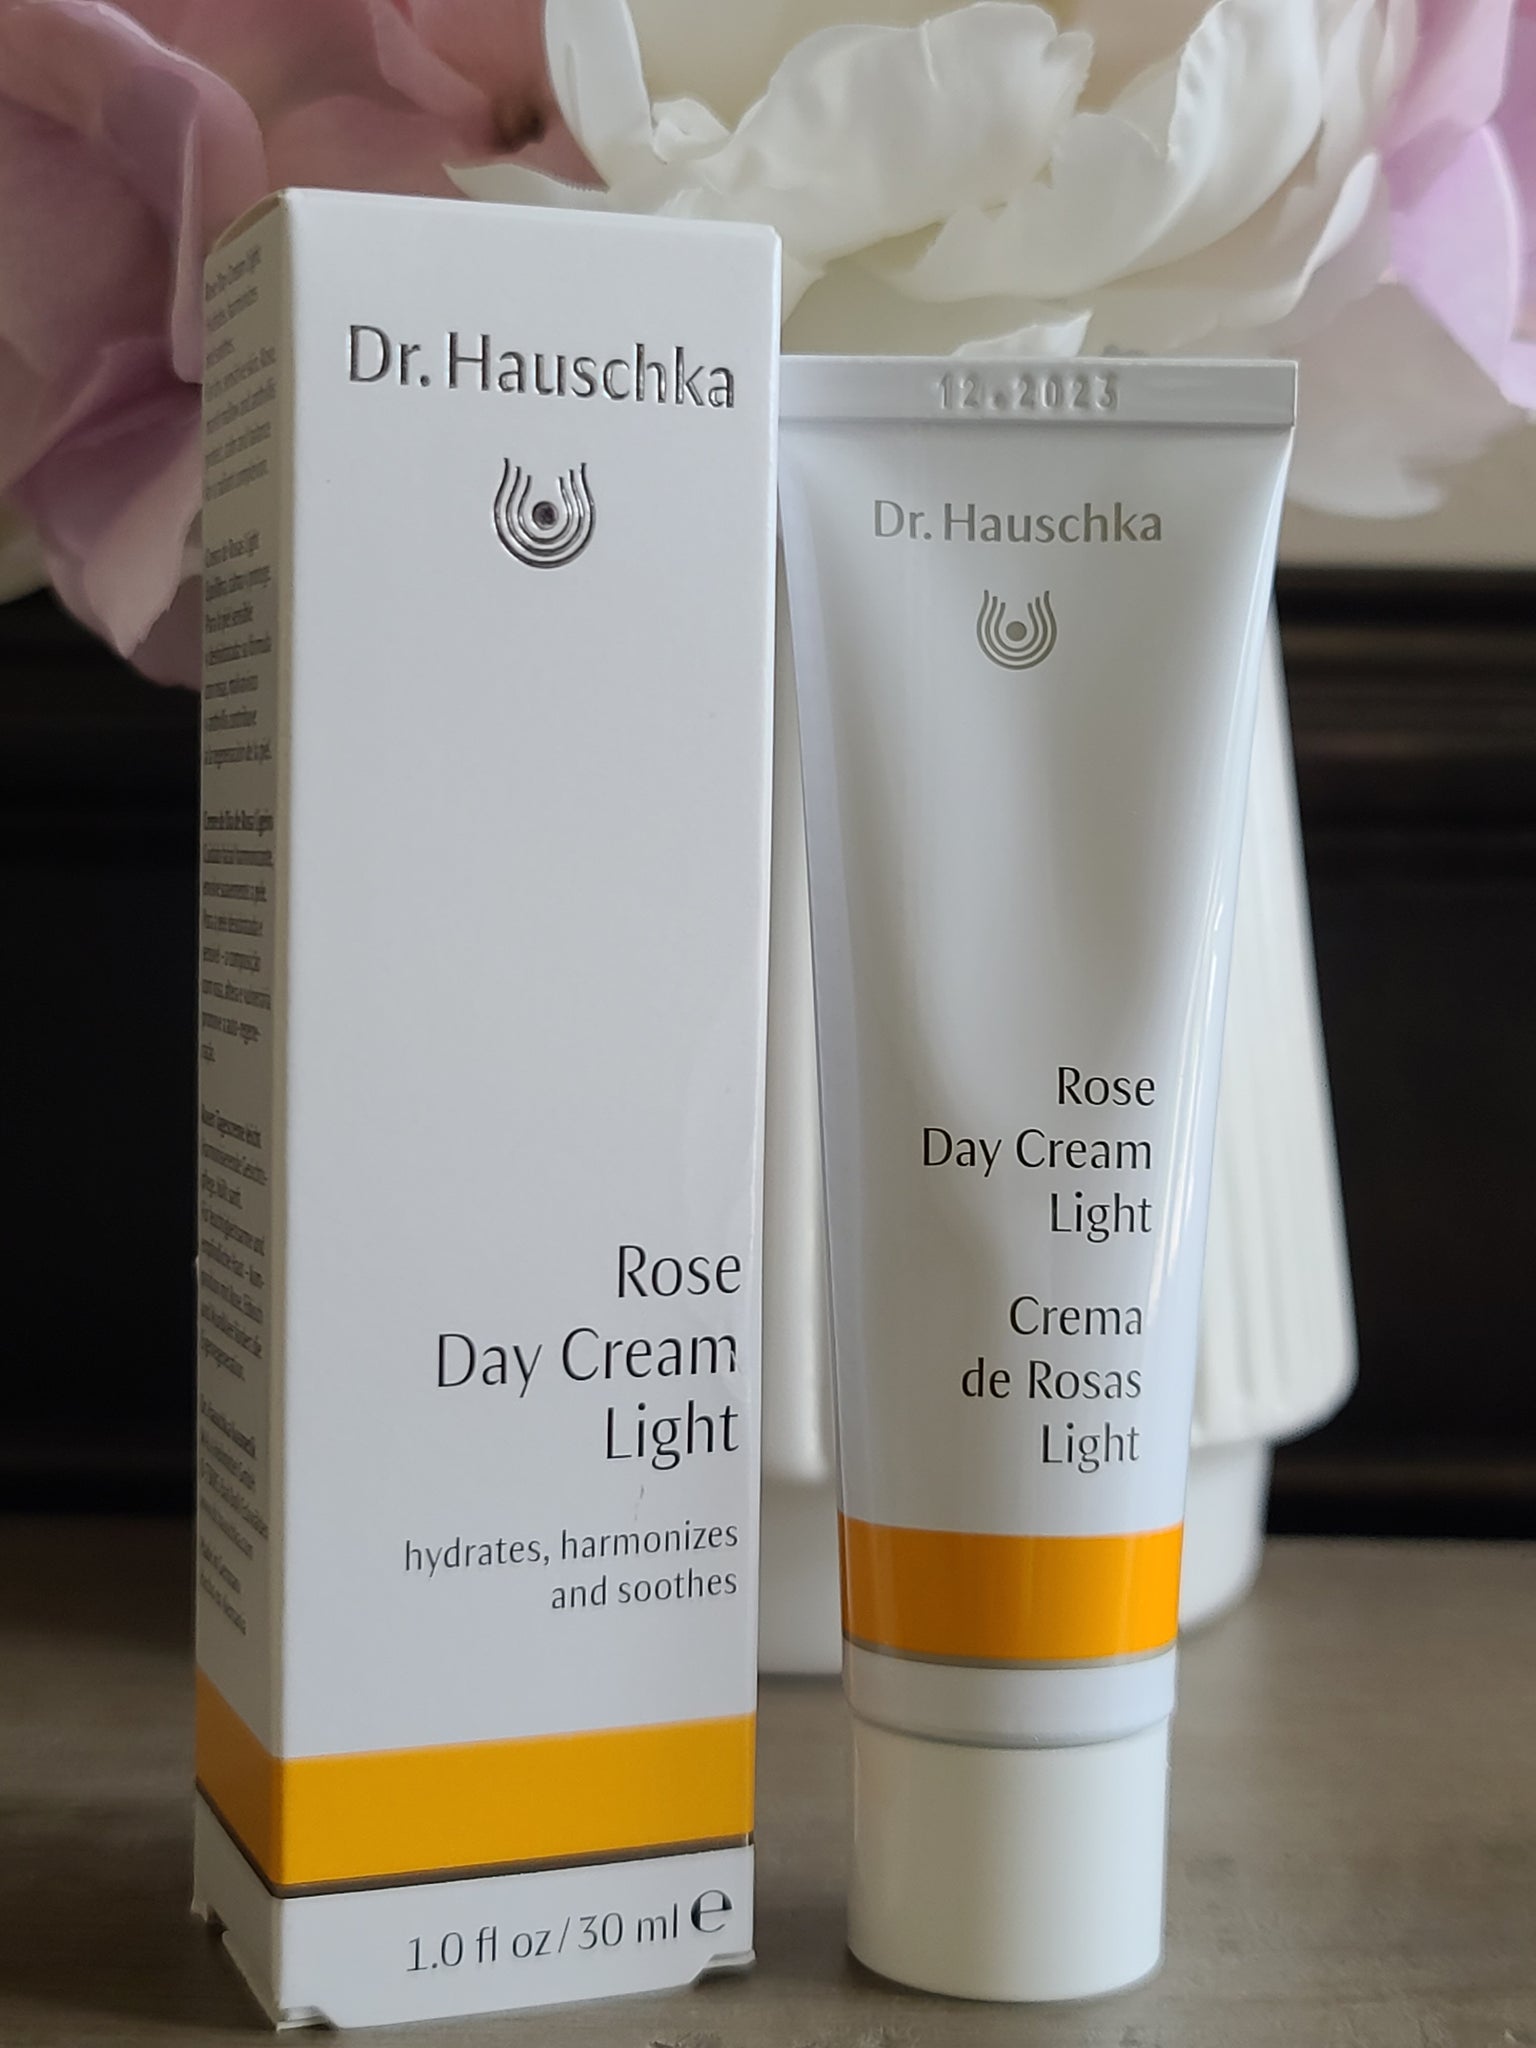 Hauschka Day Cream Light – Skintastic